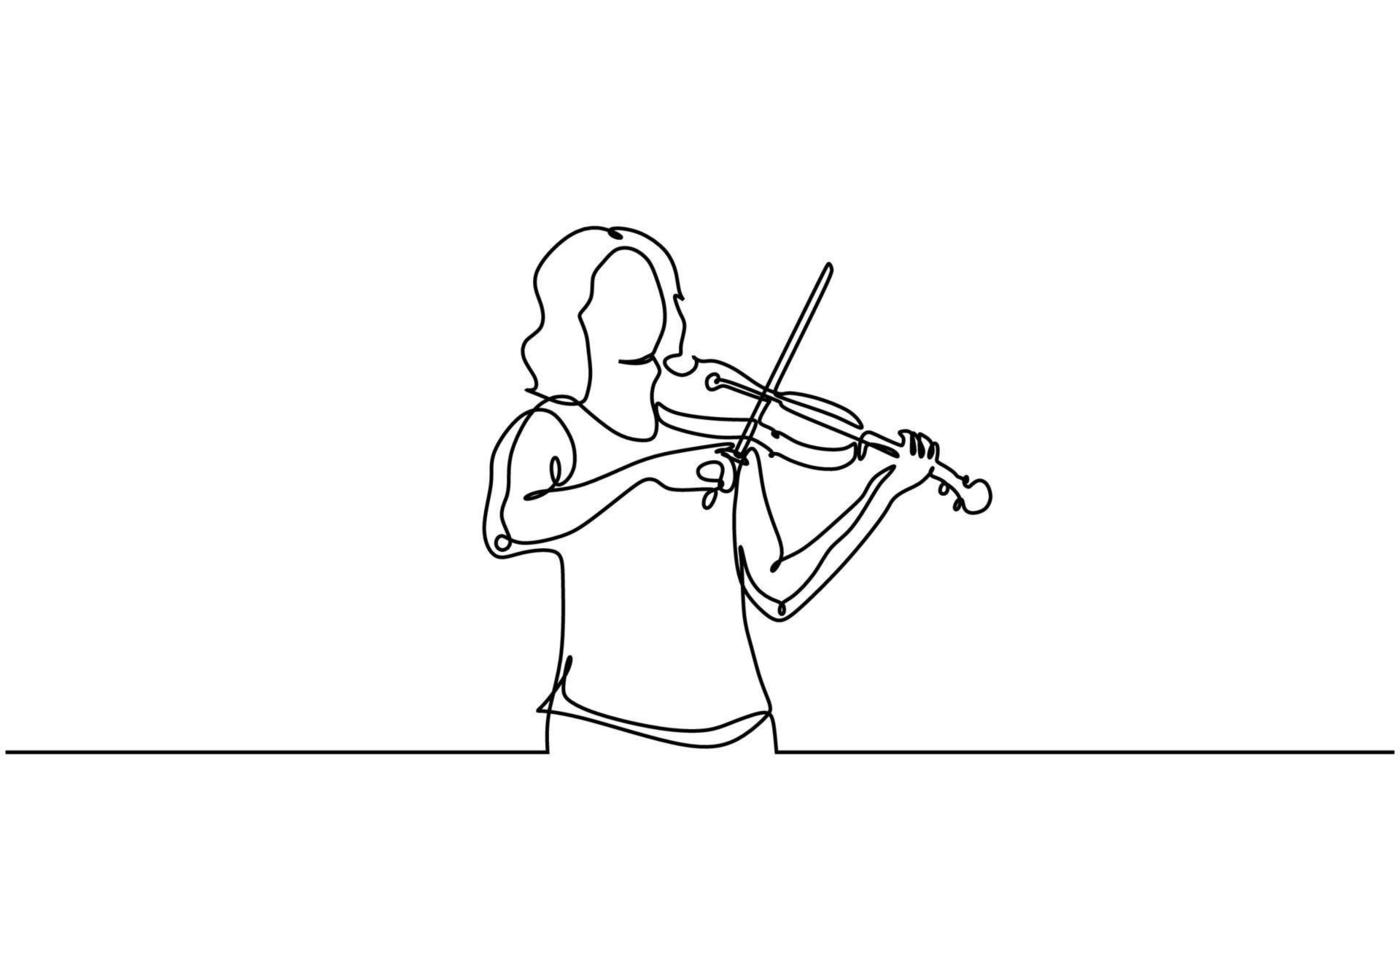 continue één lijntekening van violist. vector